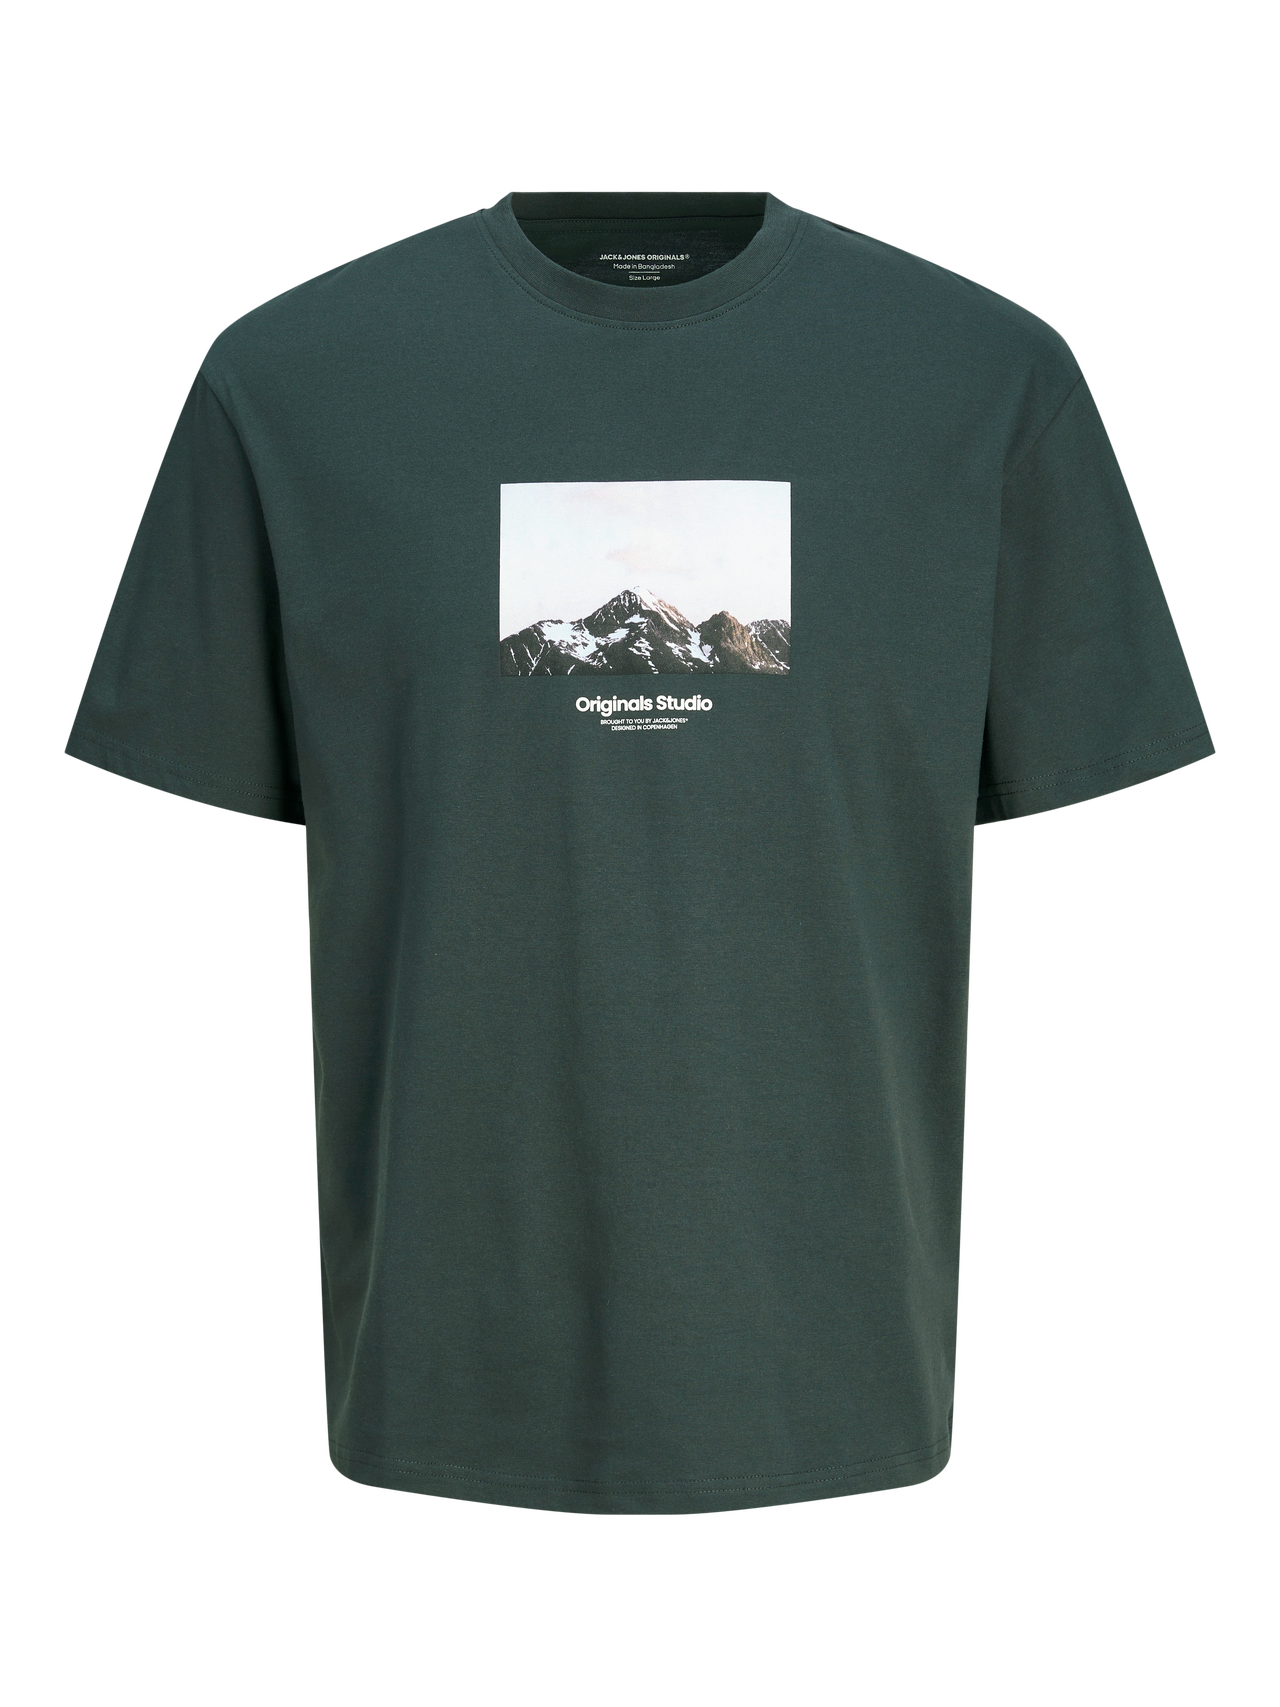 Jack & Jones Bedrukt Ronde hals T-shirt -Forest River - 12250421